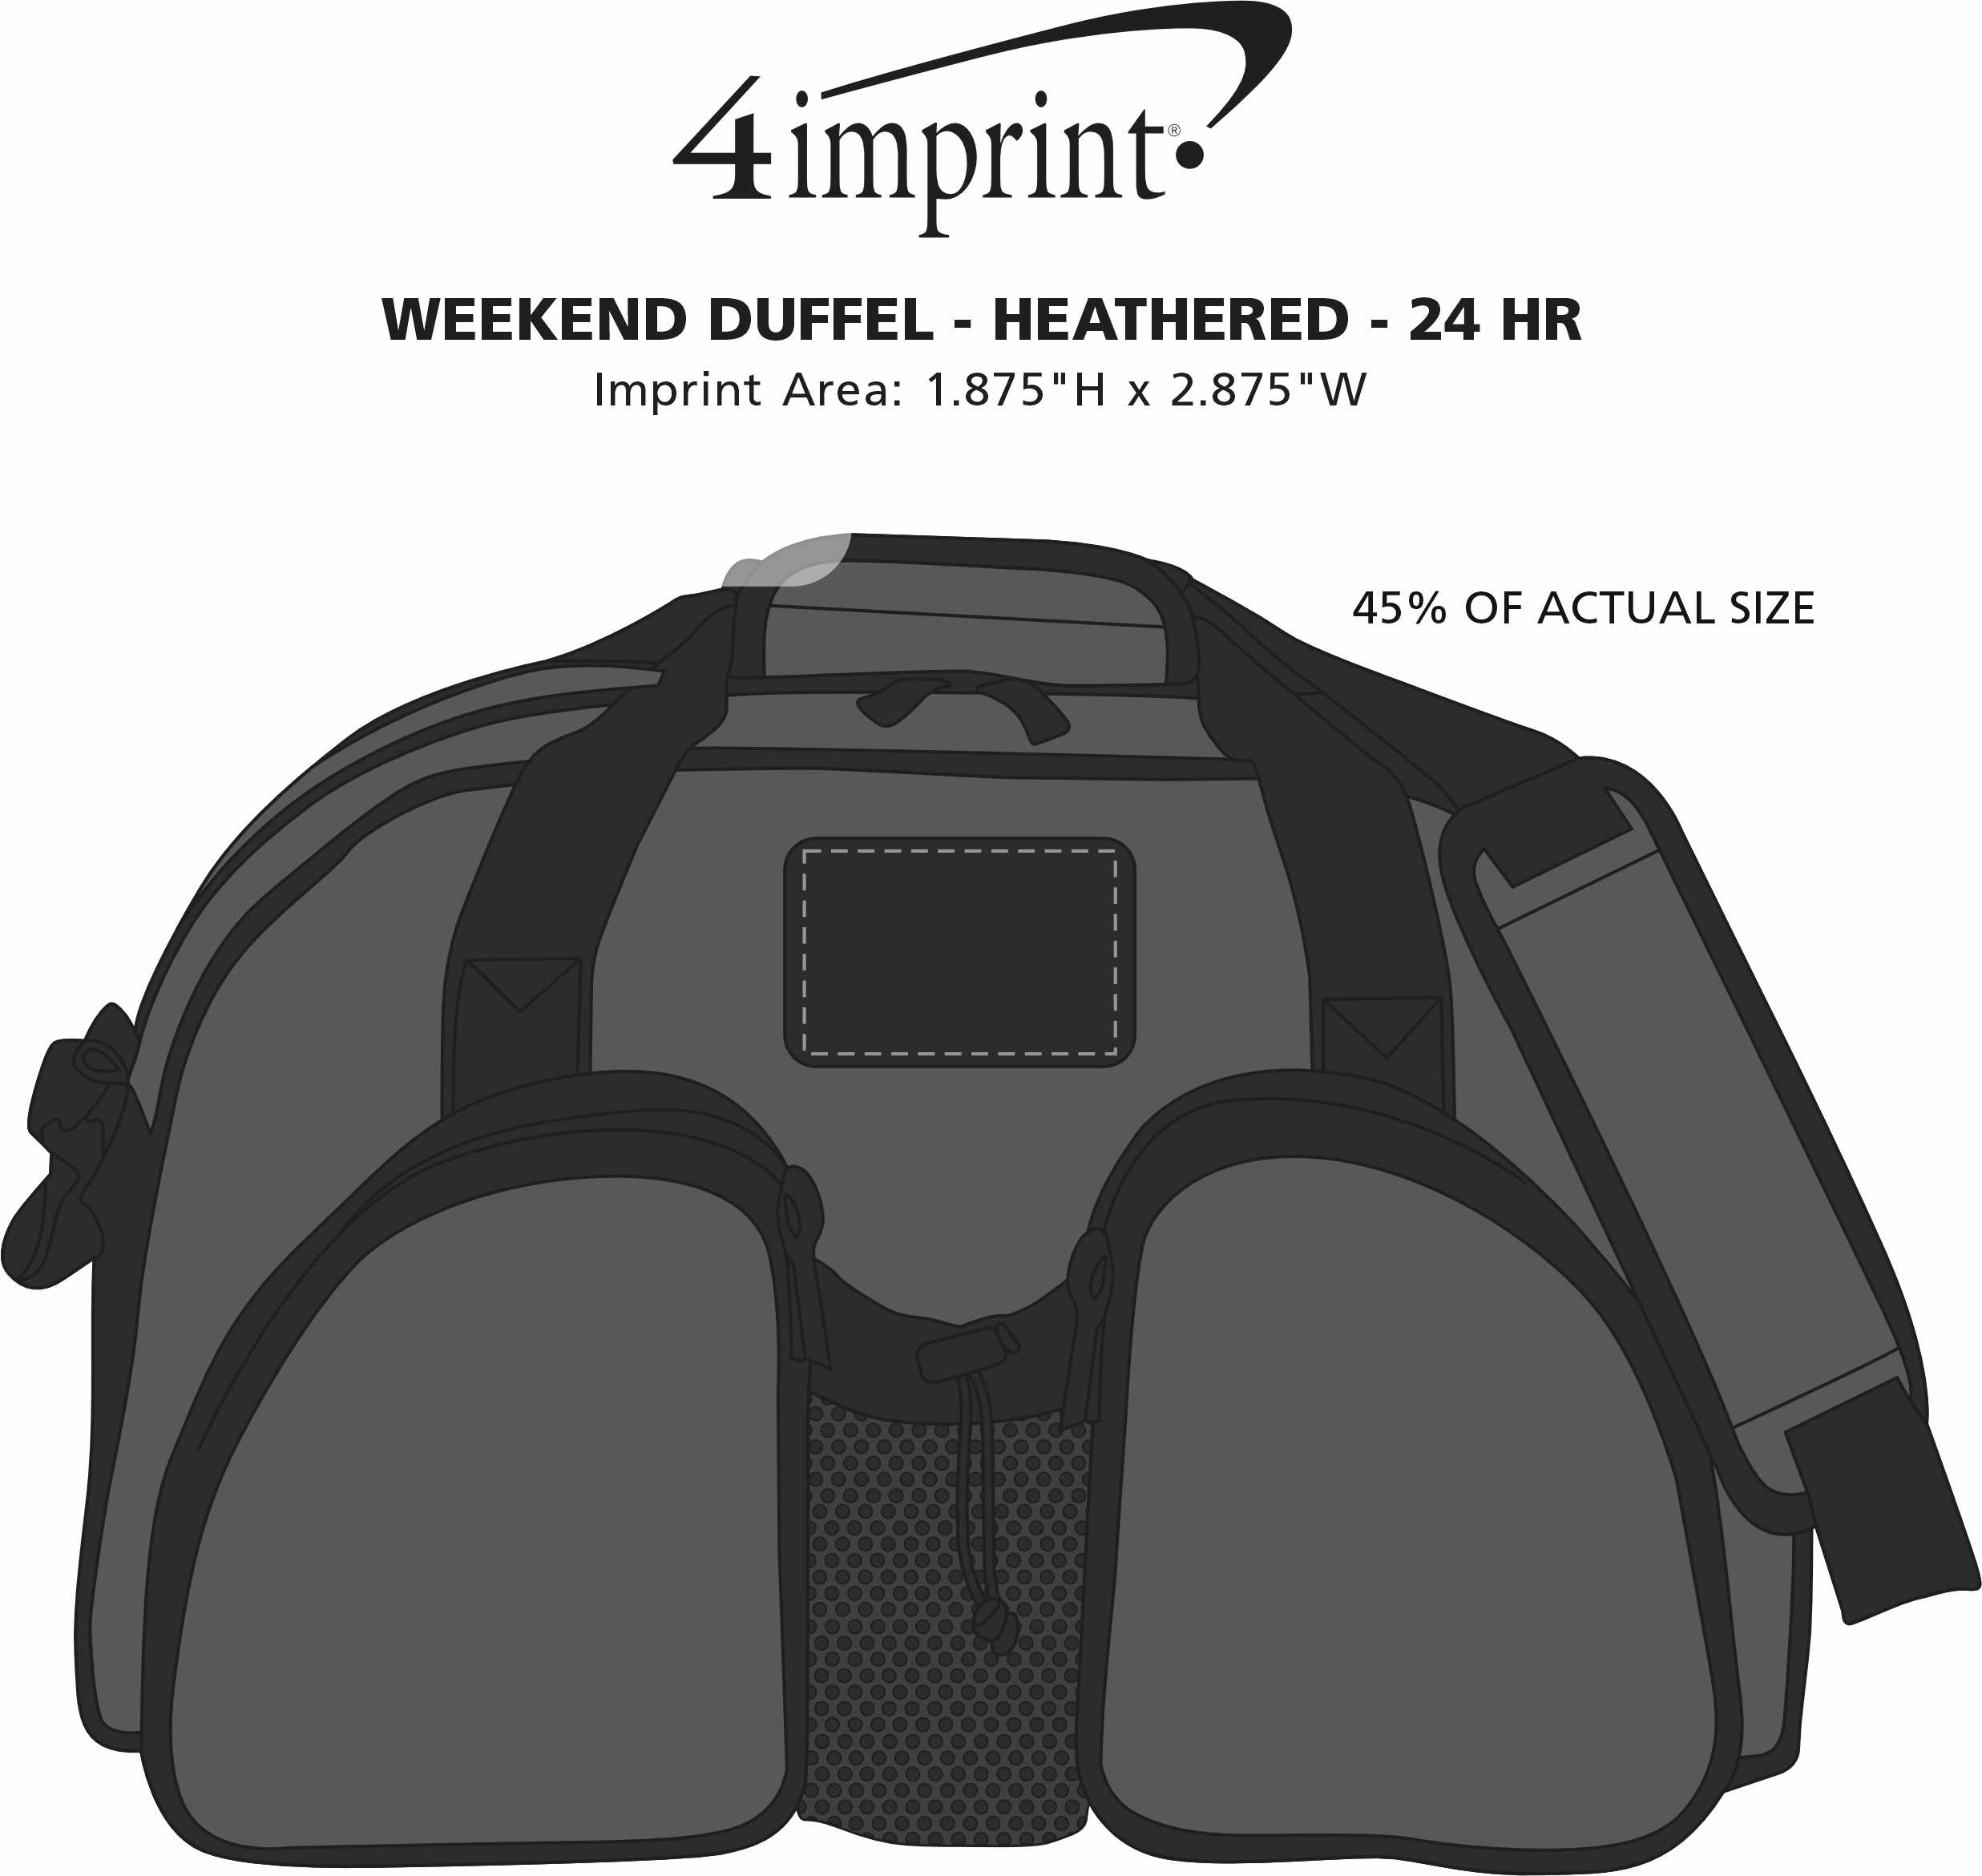 Imprint Area of Weekend Duffel - Heathered - 24 hr